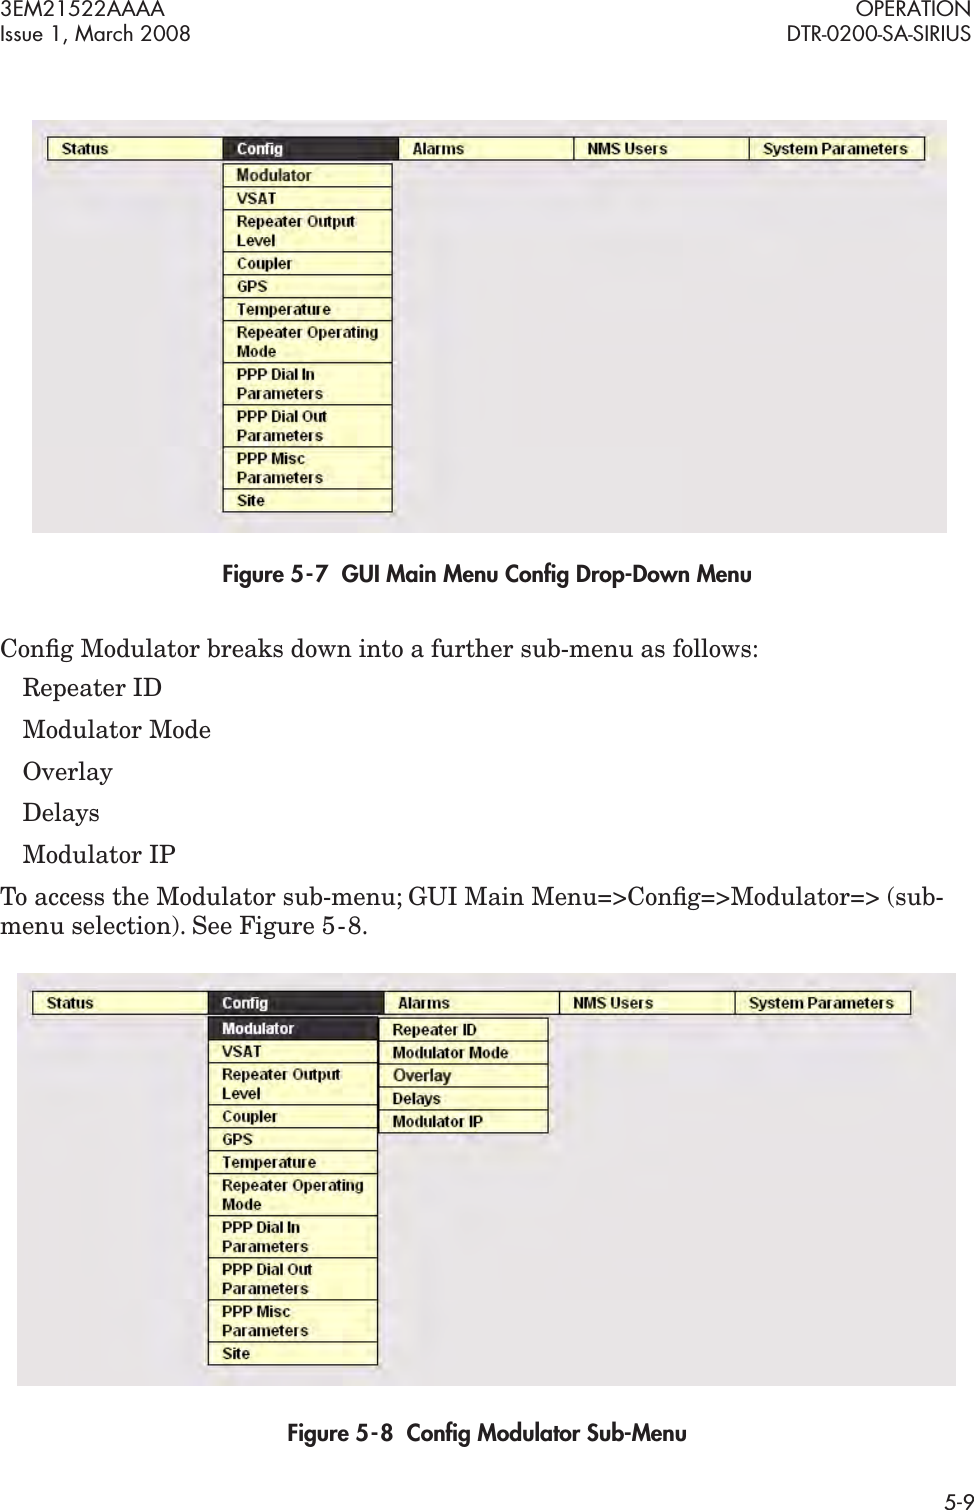 3EM21522AAAA OPERATIONIssue 1, March 2008 DTR-0200-SA-SIRIUS5-9Figure 5  -  7  GUI Main Menu Conﬁg Drop-Down MenuConﬁg Modulator breaks down into a further sub-menu as follows:Repeater IDModulator ModeOverlayDelaysModulator IPTo access the Modulator sub-menu; GUI Main Menu=&gt;Conﬁg=&gt;Modulator=&gt; (sub-menu selection). See Figure 5  -  8.Figure 5  -  8  Conﬁg Modulator Sub-Menu